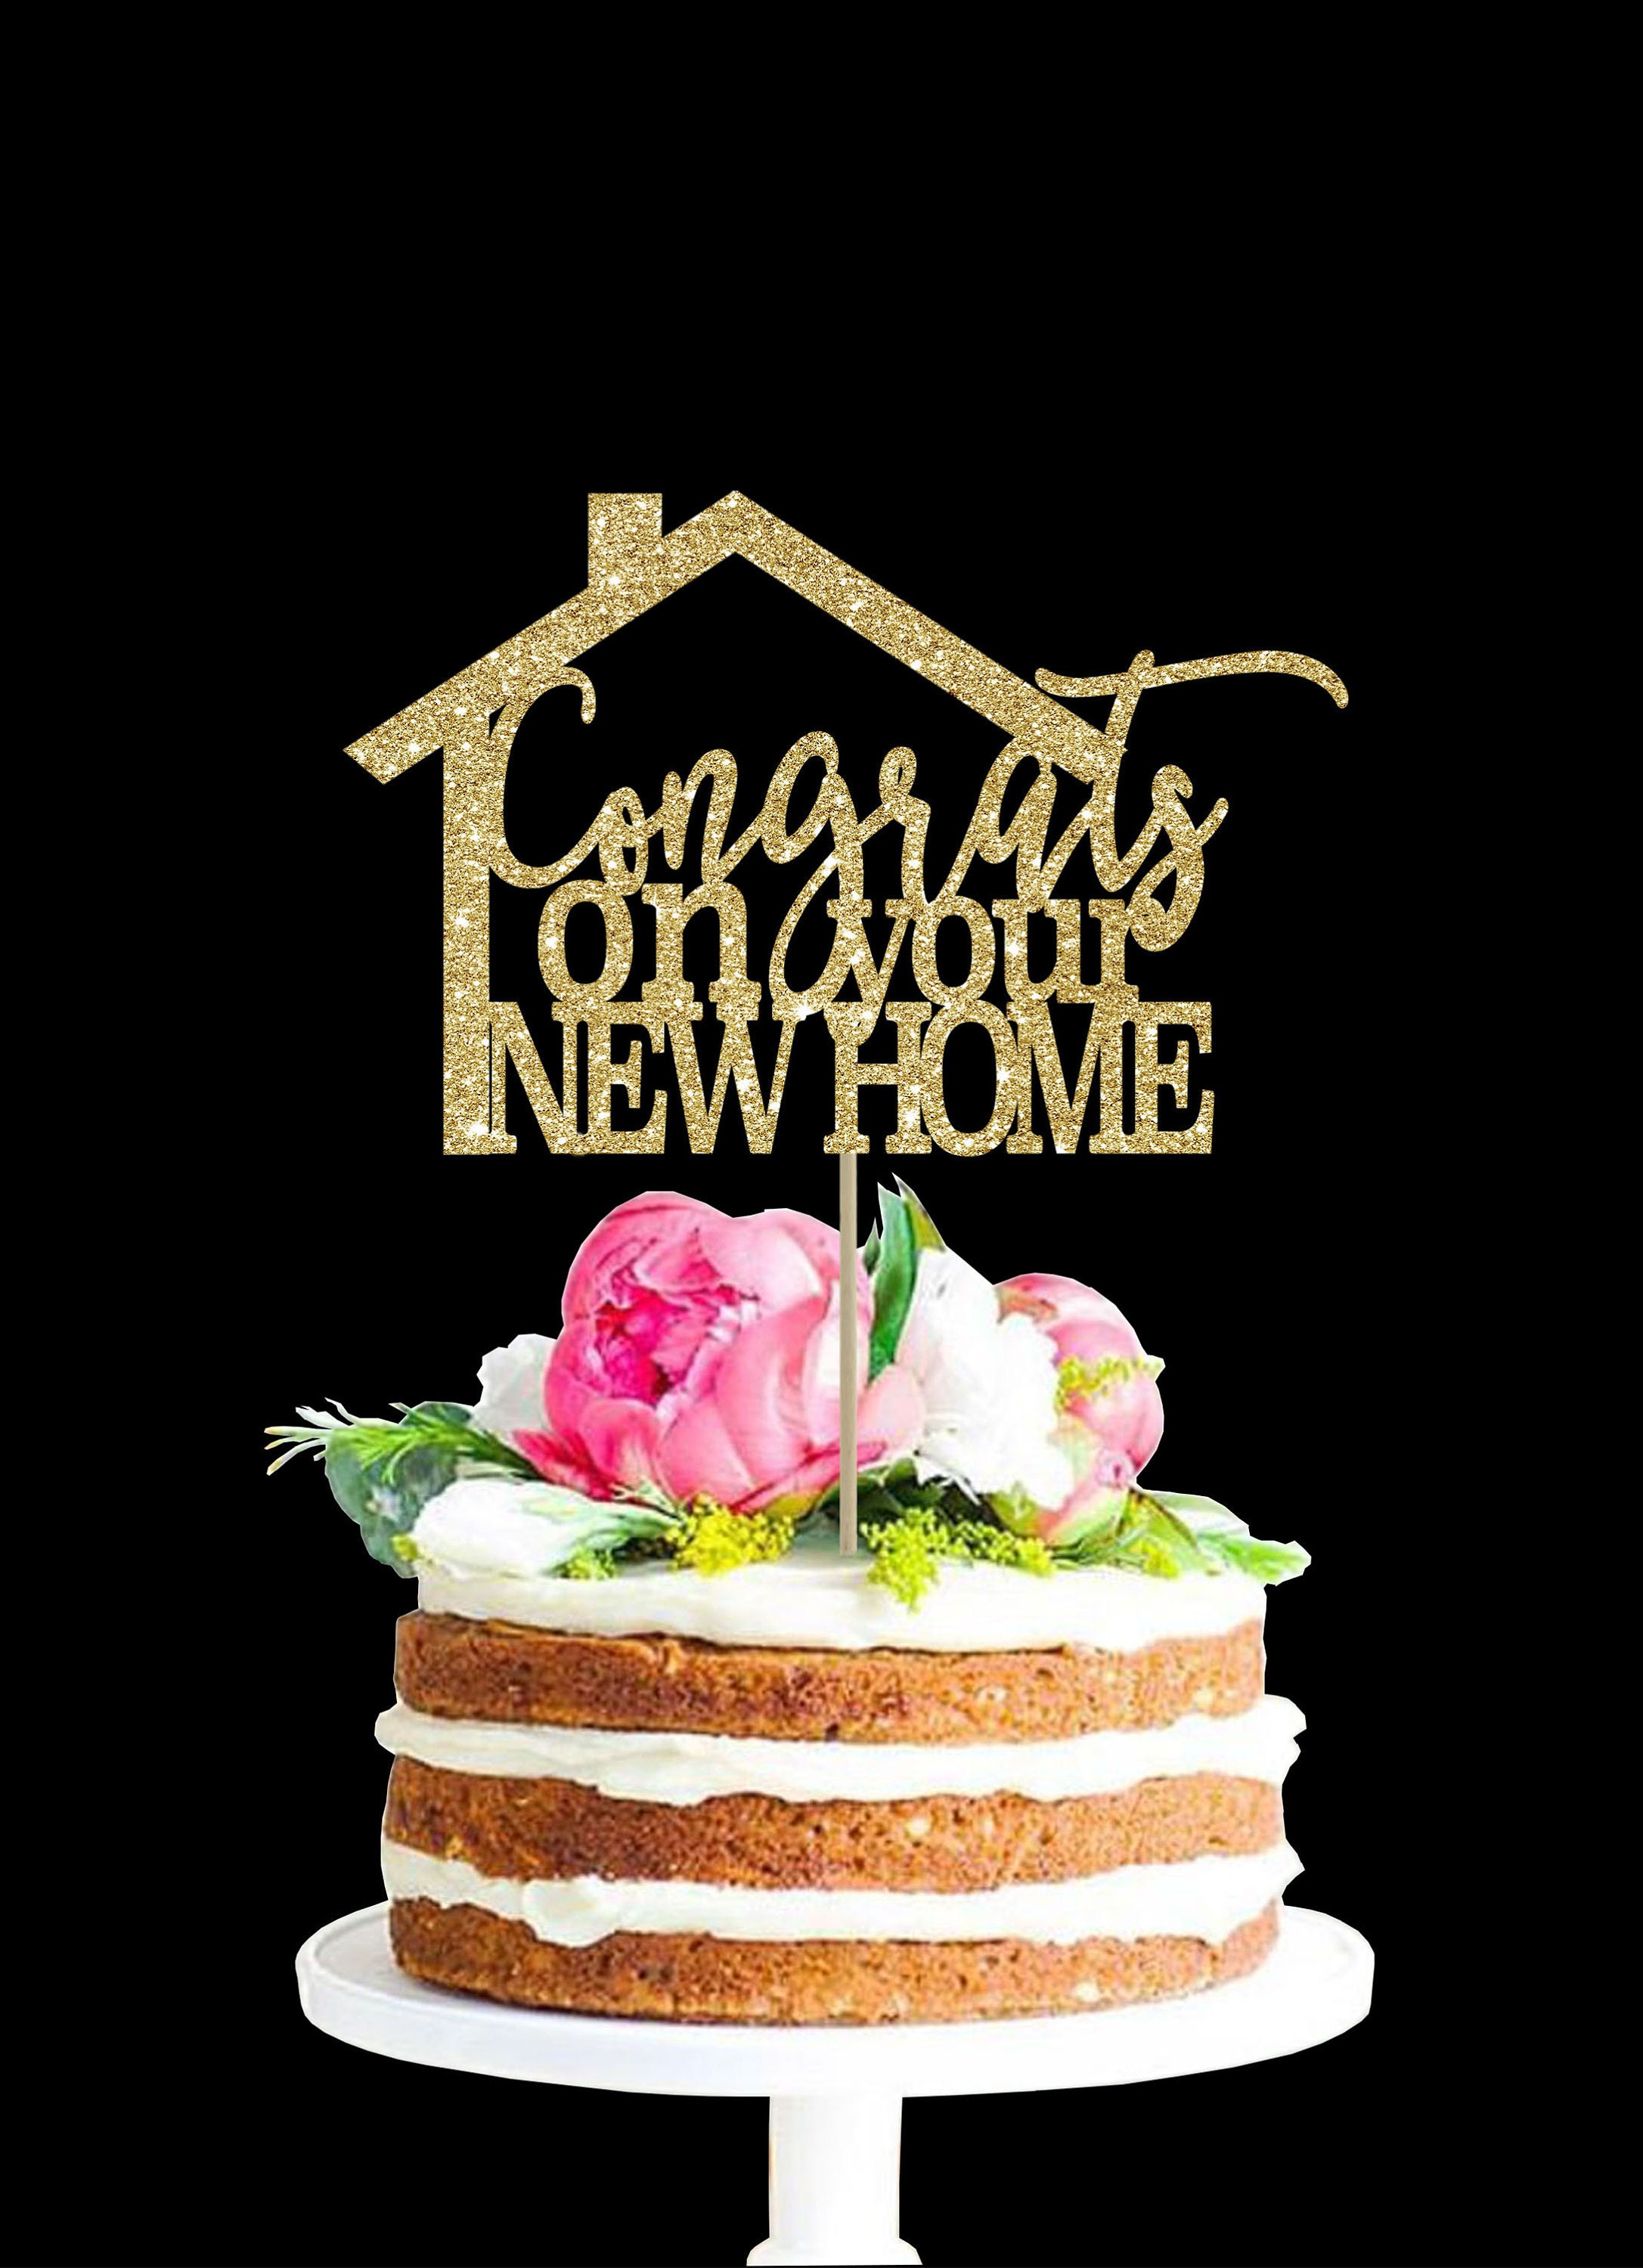 New Home cake | Housewarming cake, Welcome home cakes, House cake